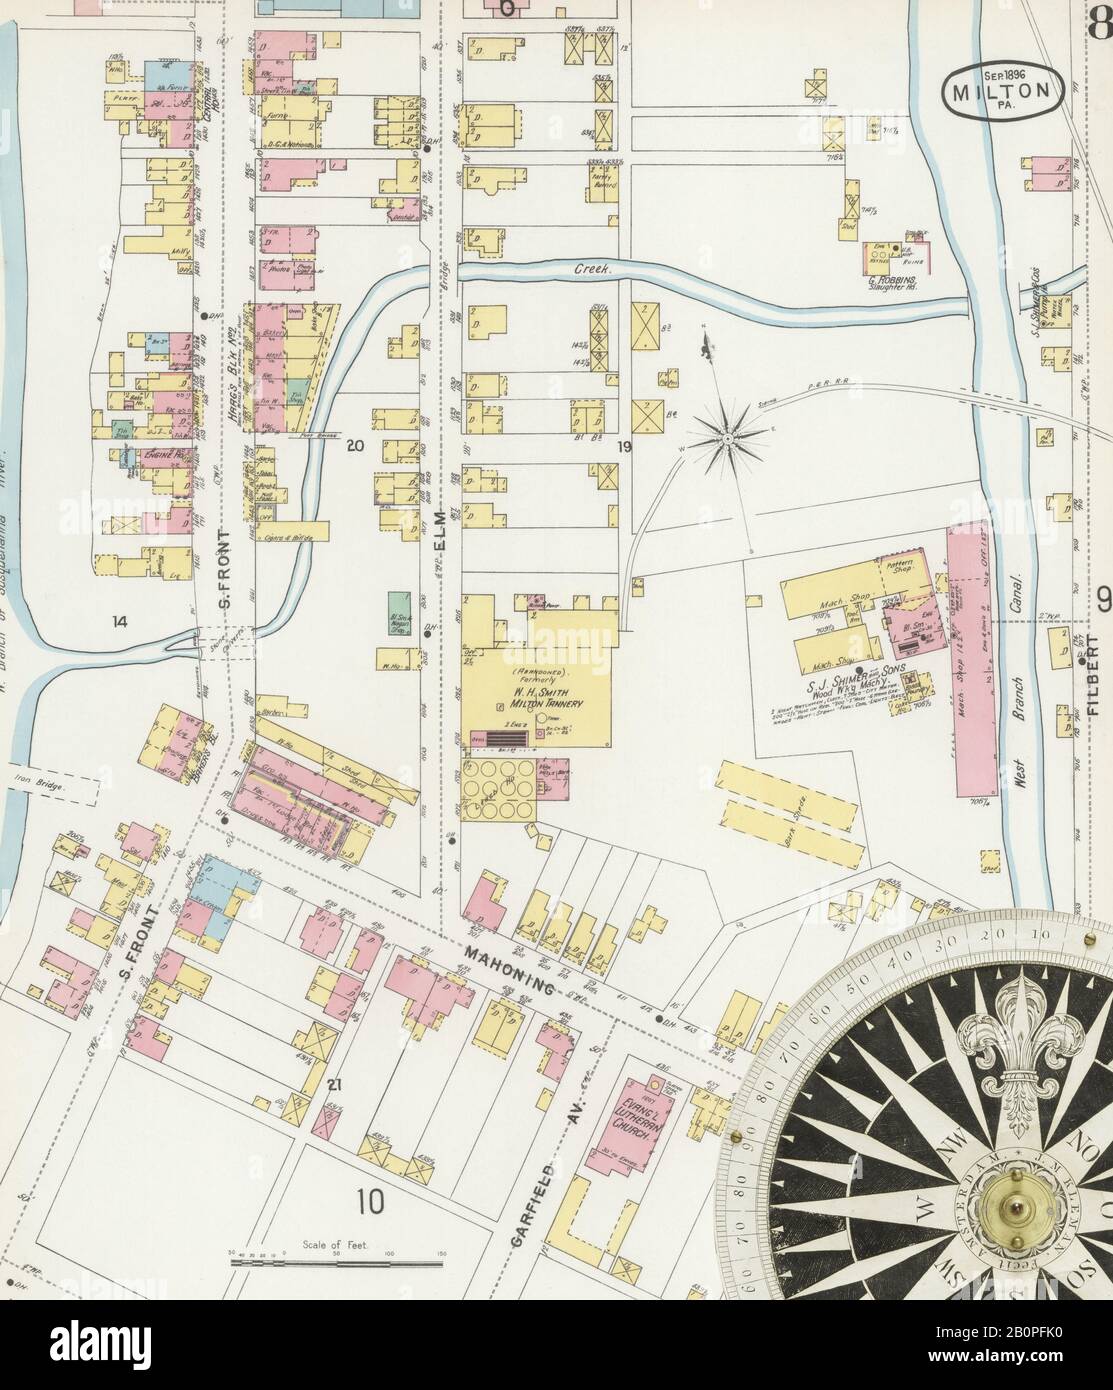 Bild 8 von Sanborn Fire Insurance Map aus Milton, Northumberland County, Pennsylvania. Sep. 11 Blatt(e), Amerika, Straßenkarte mit einem Kompass Aus Dem 19. Jahrhundert Stockfoto